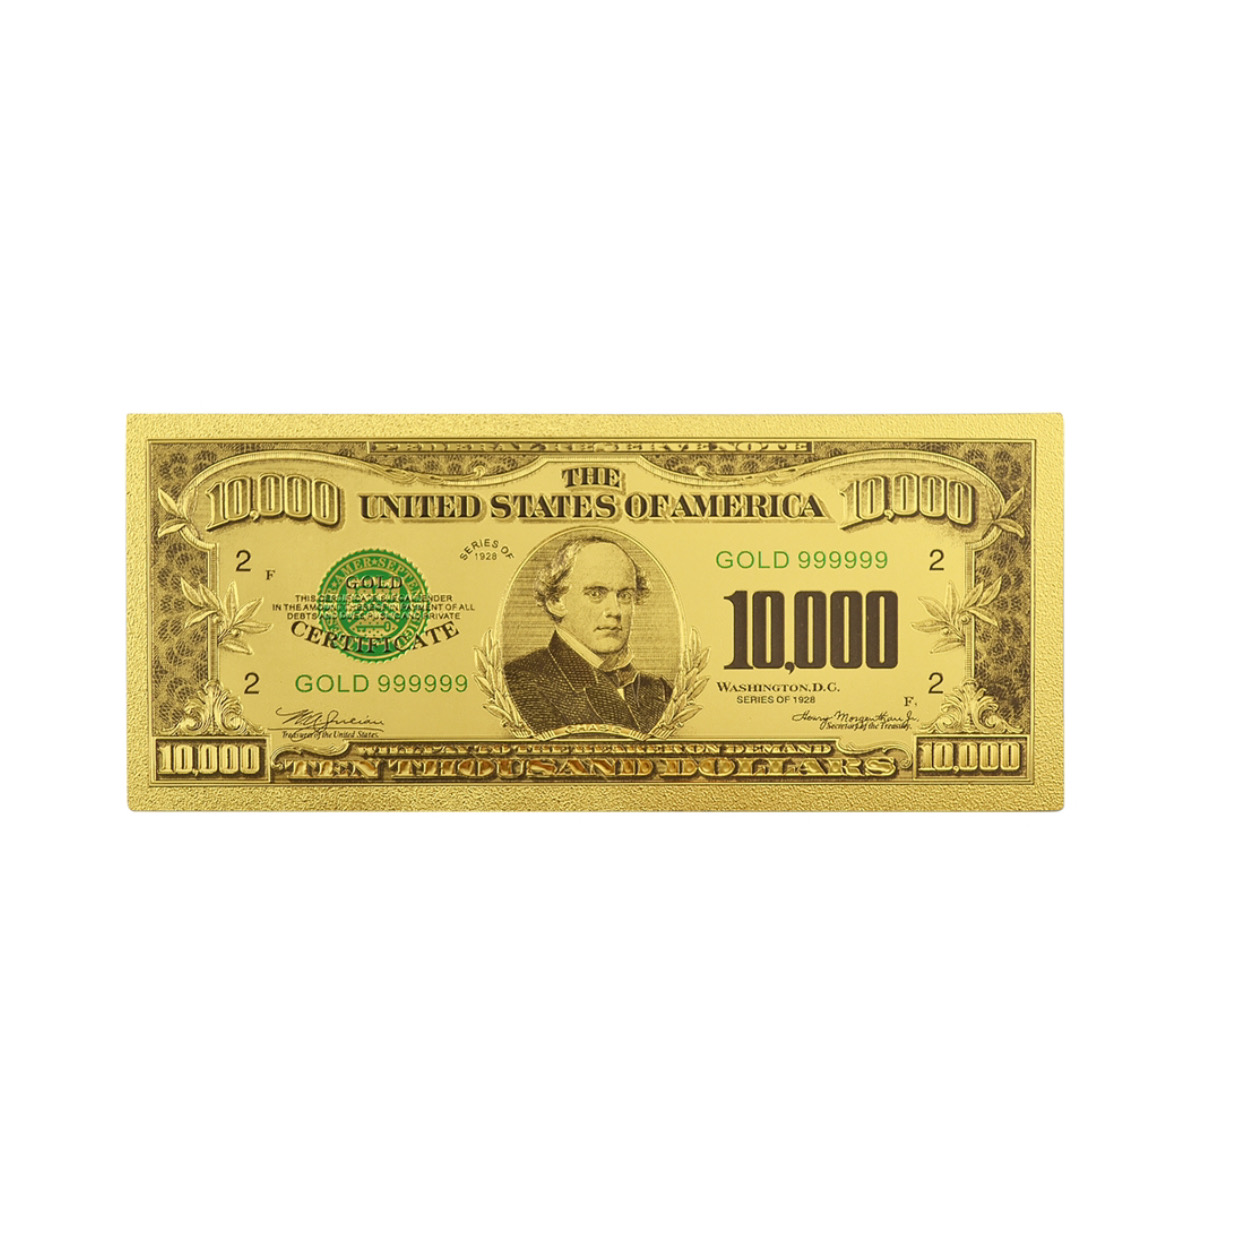 24K GOLD COMMEMORATIVE MILLION DOLLAR BILL ART COLLECTIBLE USA US  money display